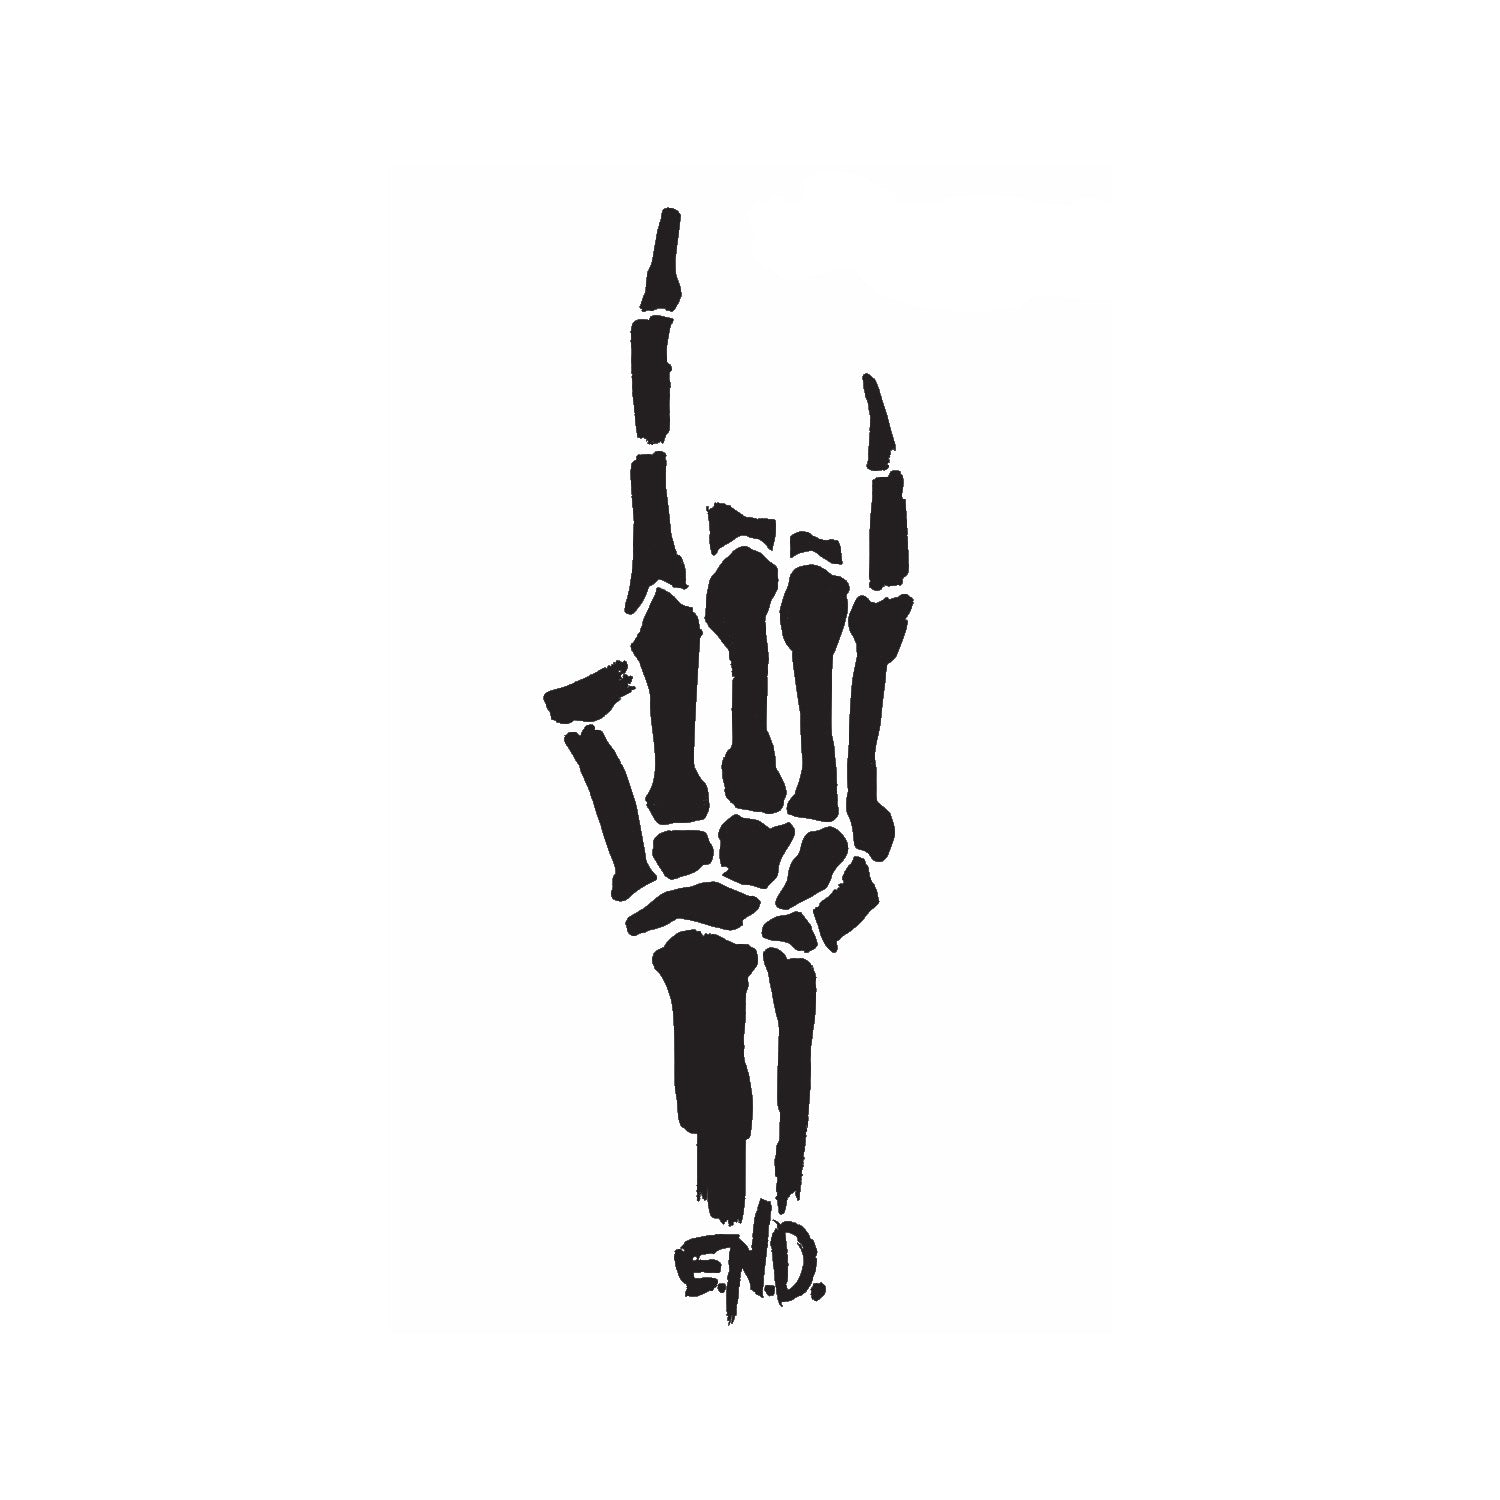 Emo’s Not Dead, Band Merch, Live Forever Sticker, Rock Hand, Skeleton